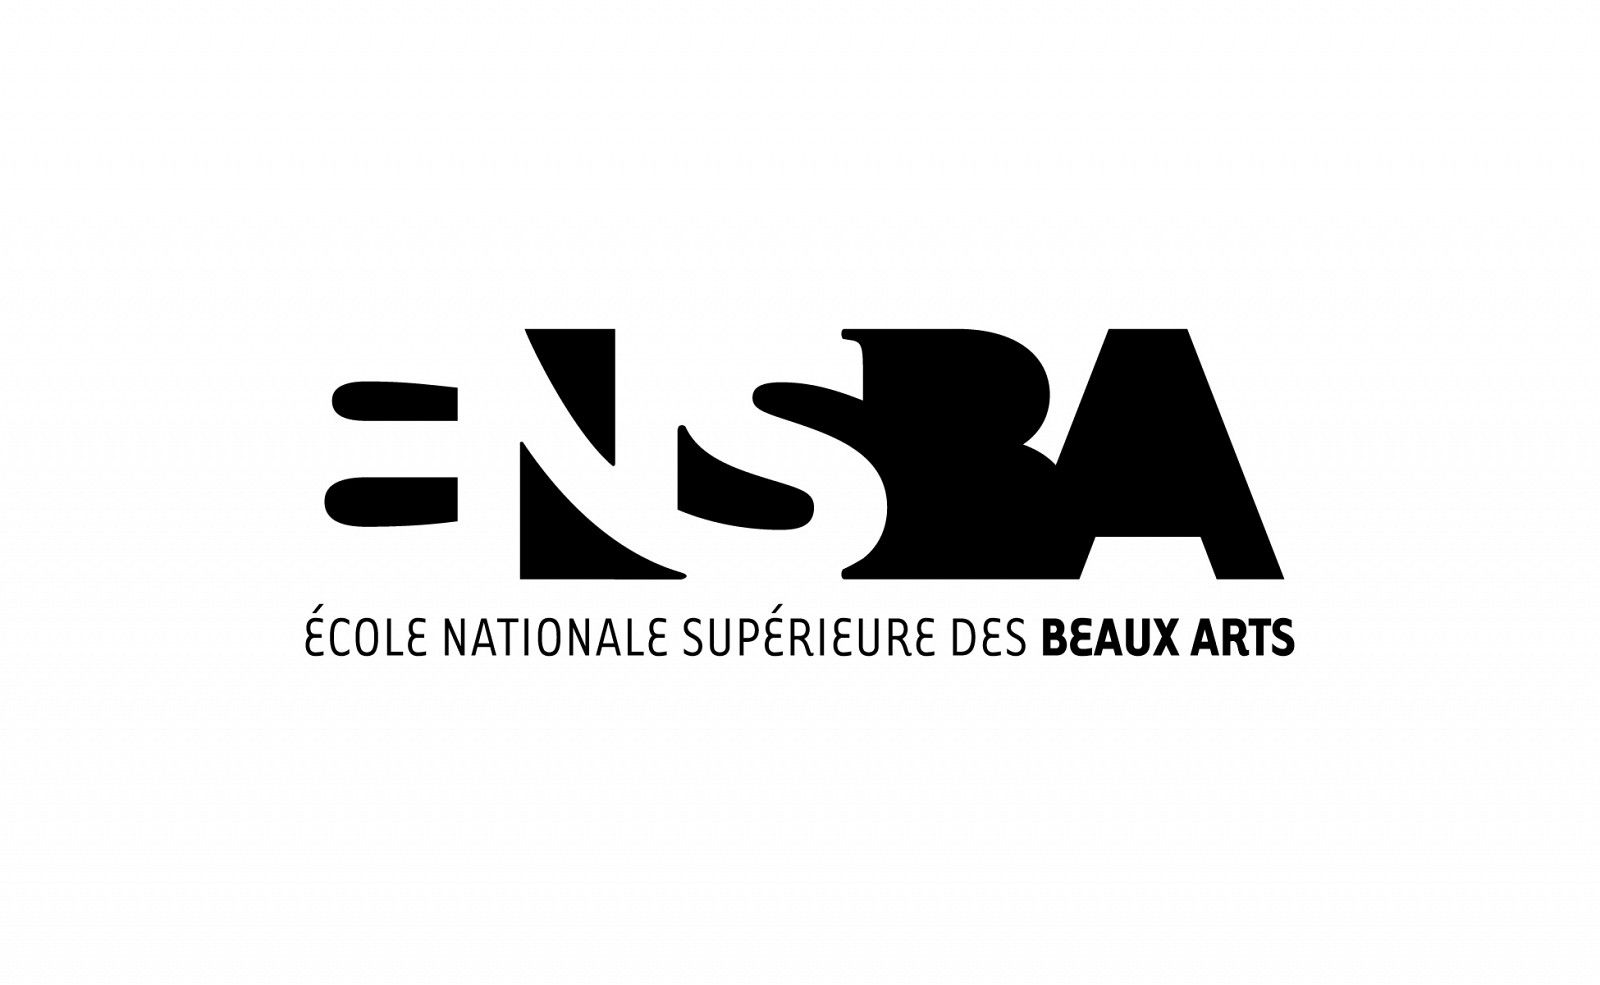 National Superior School of Fine Arts (ENSBA)